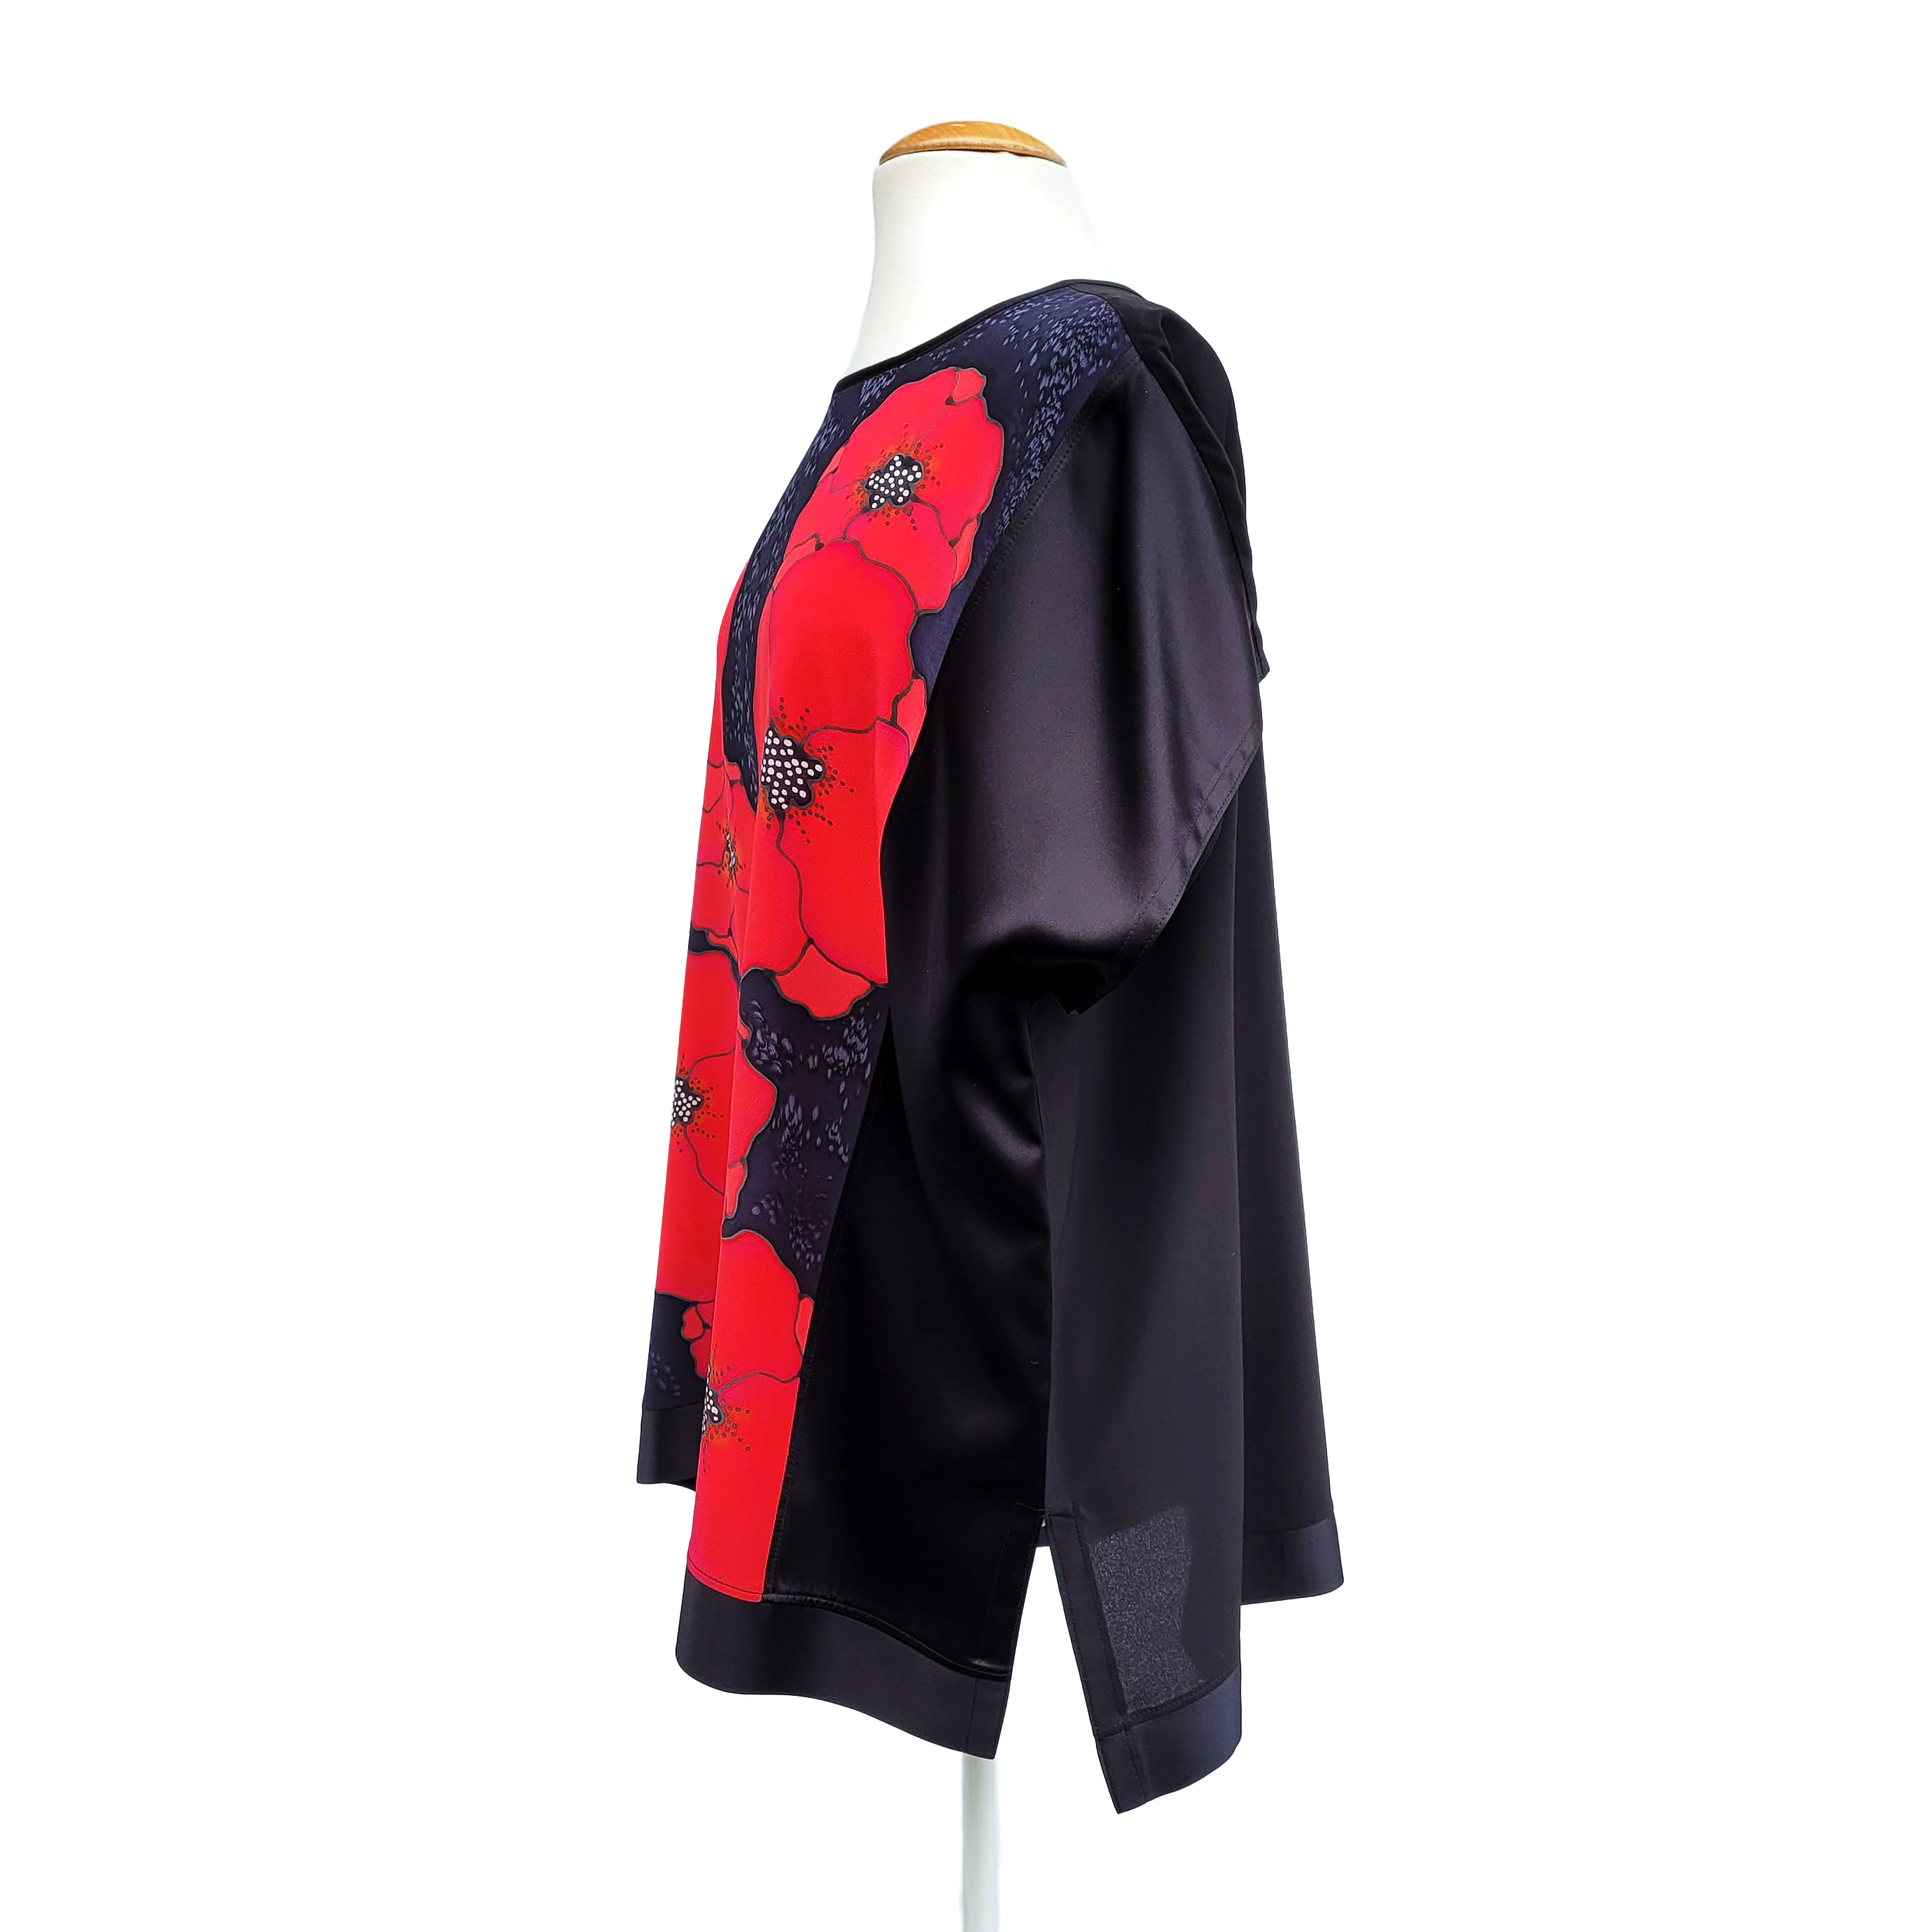 black silk ladies plus size top hand painted clothing red poppy art design handmade by Lynne Kiel